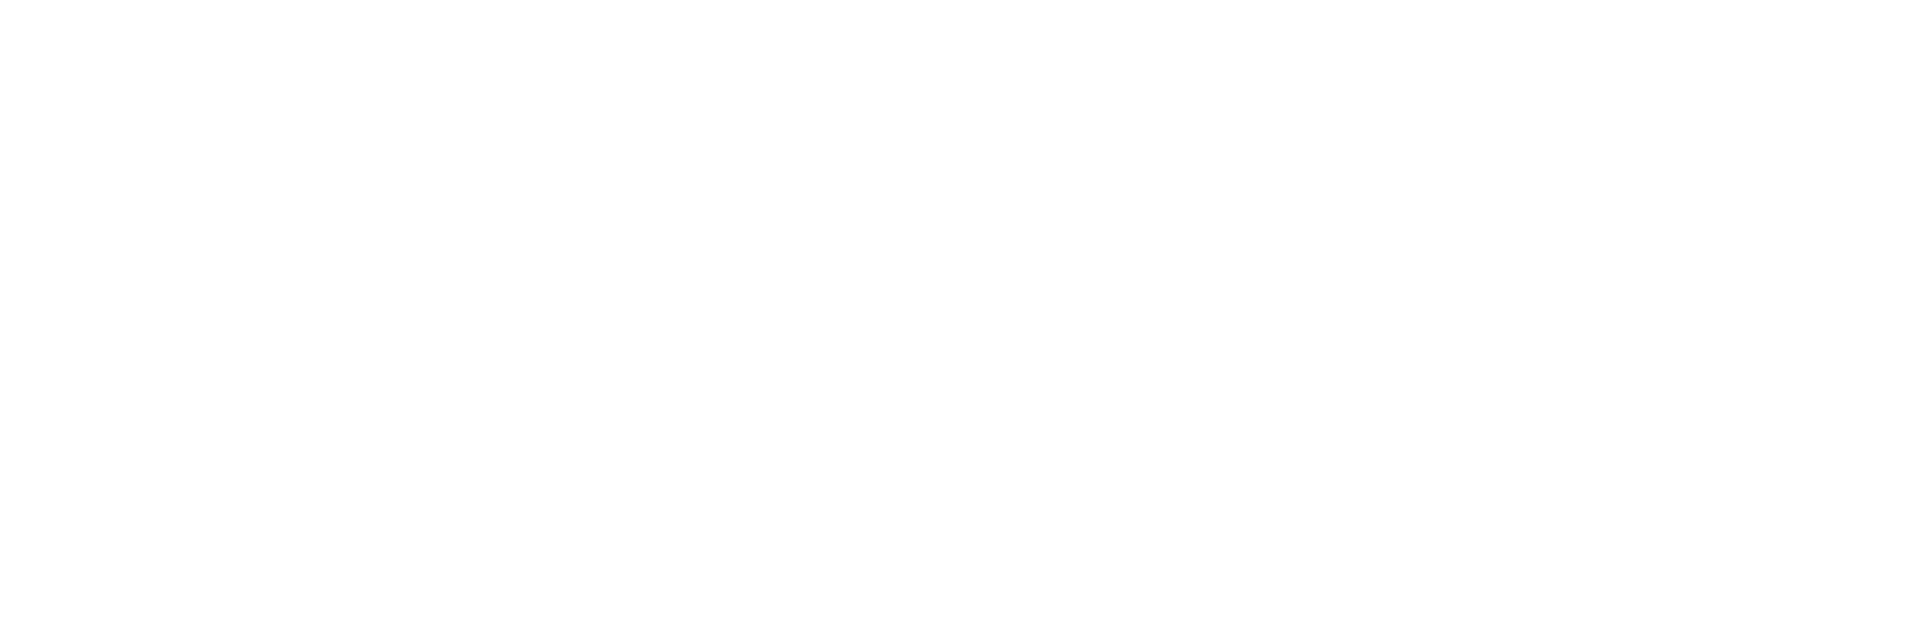 ZB Electric LLC